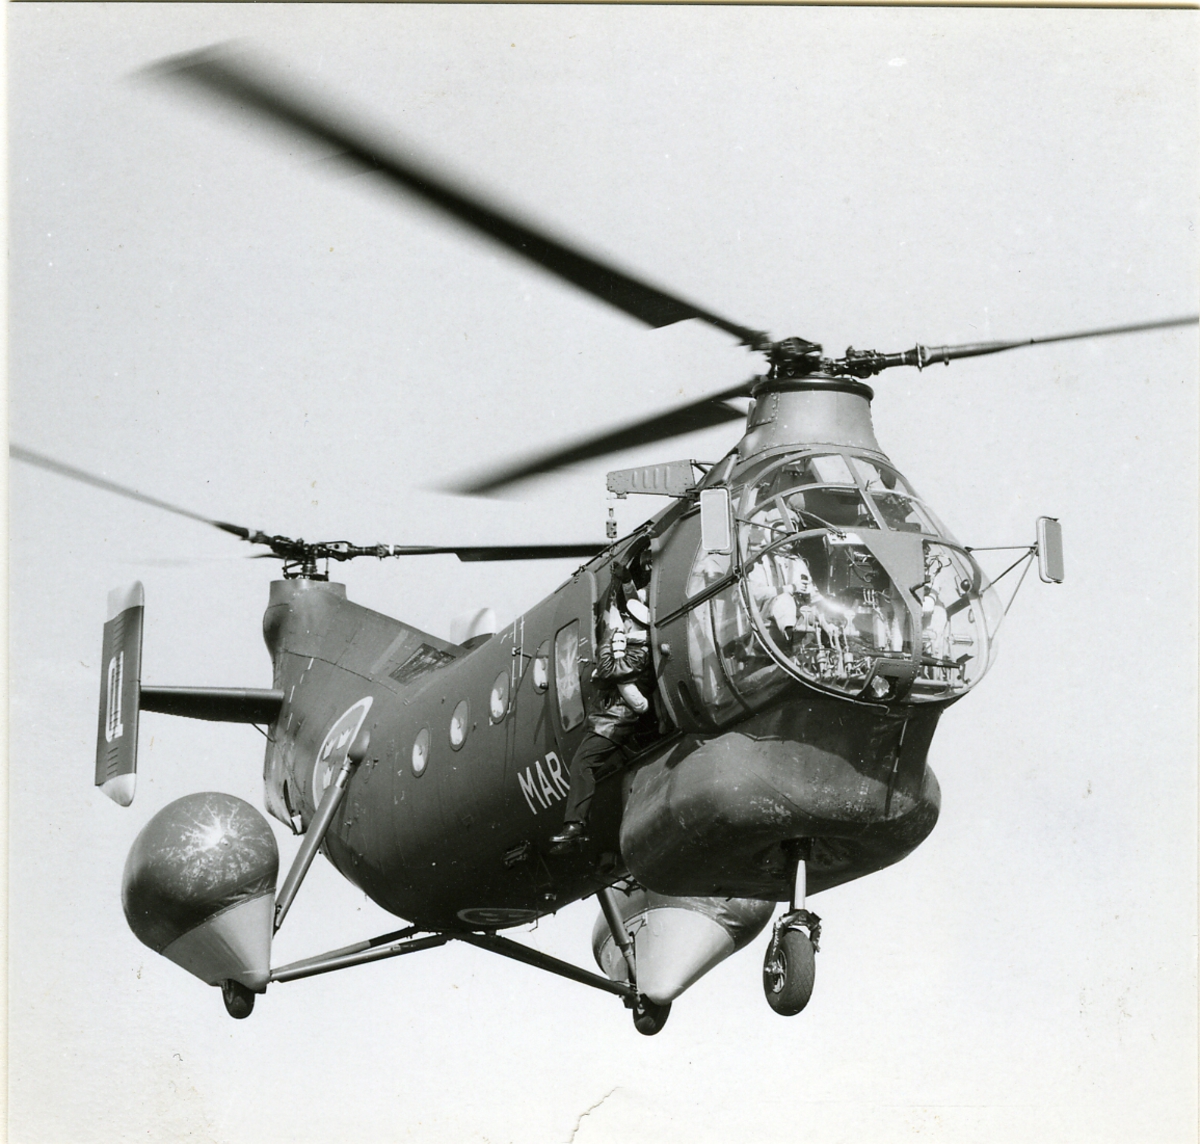 Svenska marinens helikopter 01 av typ Hkp1 (Vertol 44).